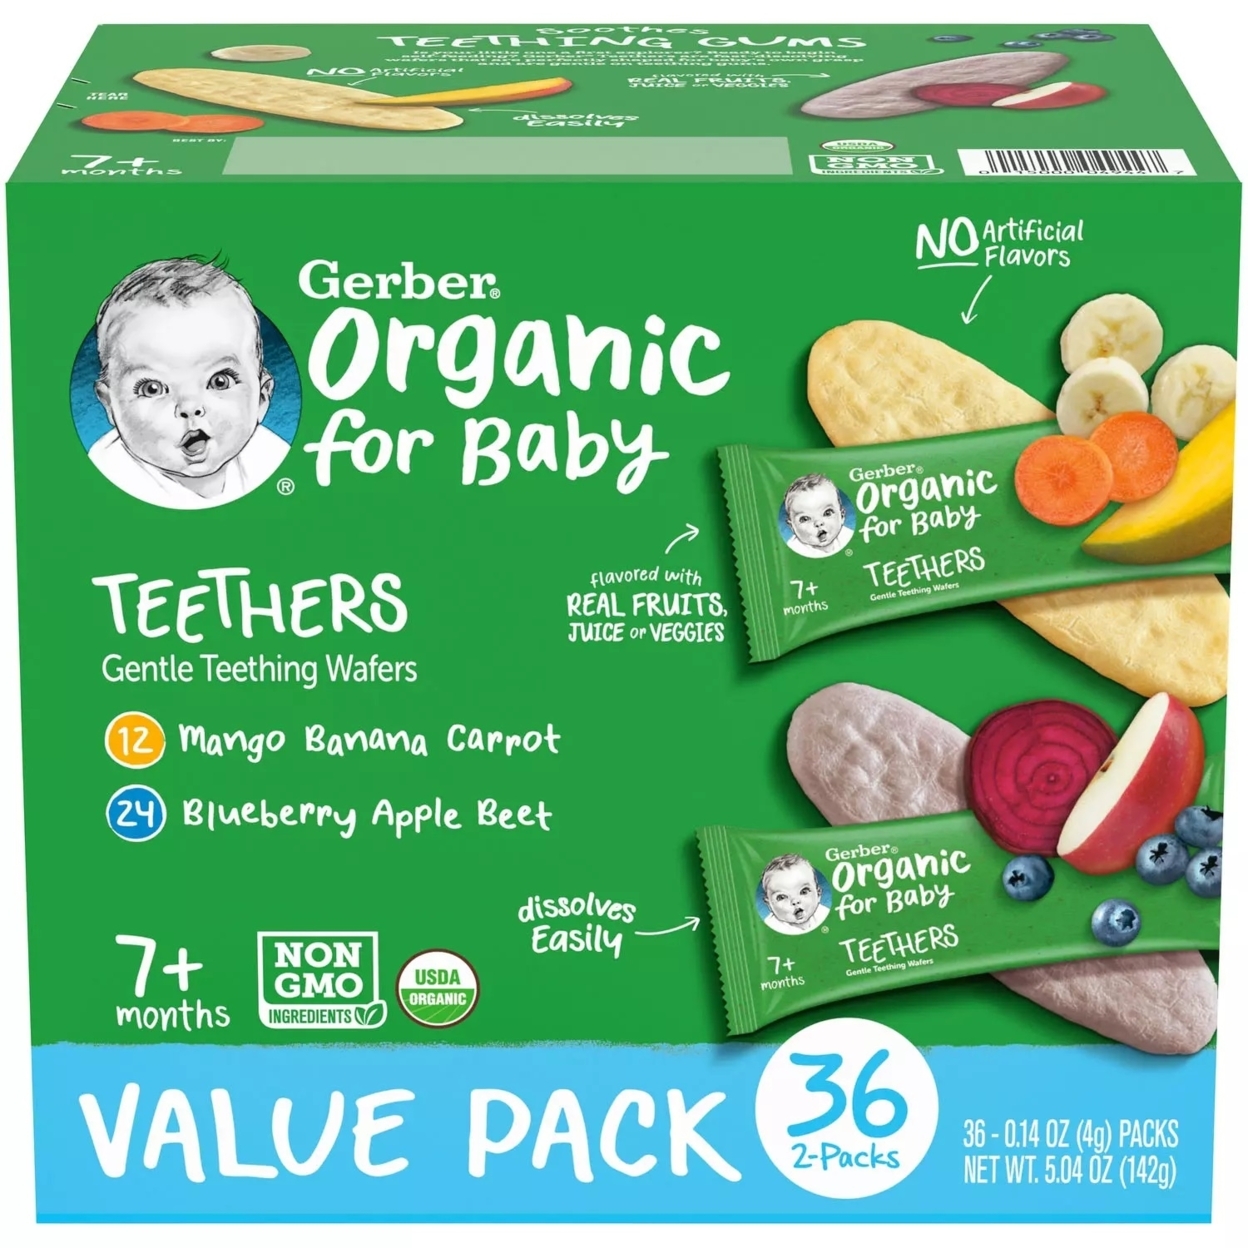 Gerber Organic Teethers, Variety Pack (36 Count)